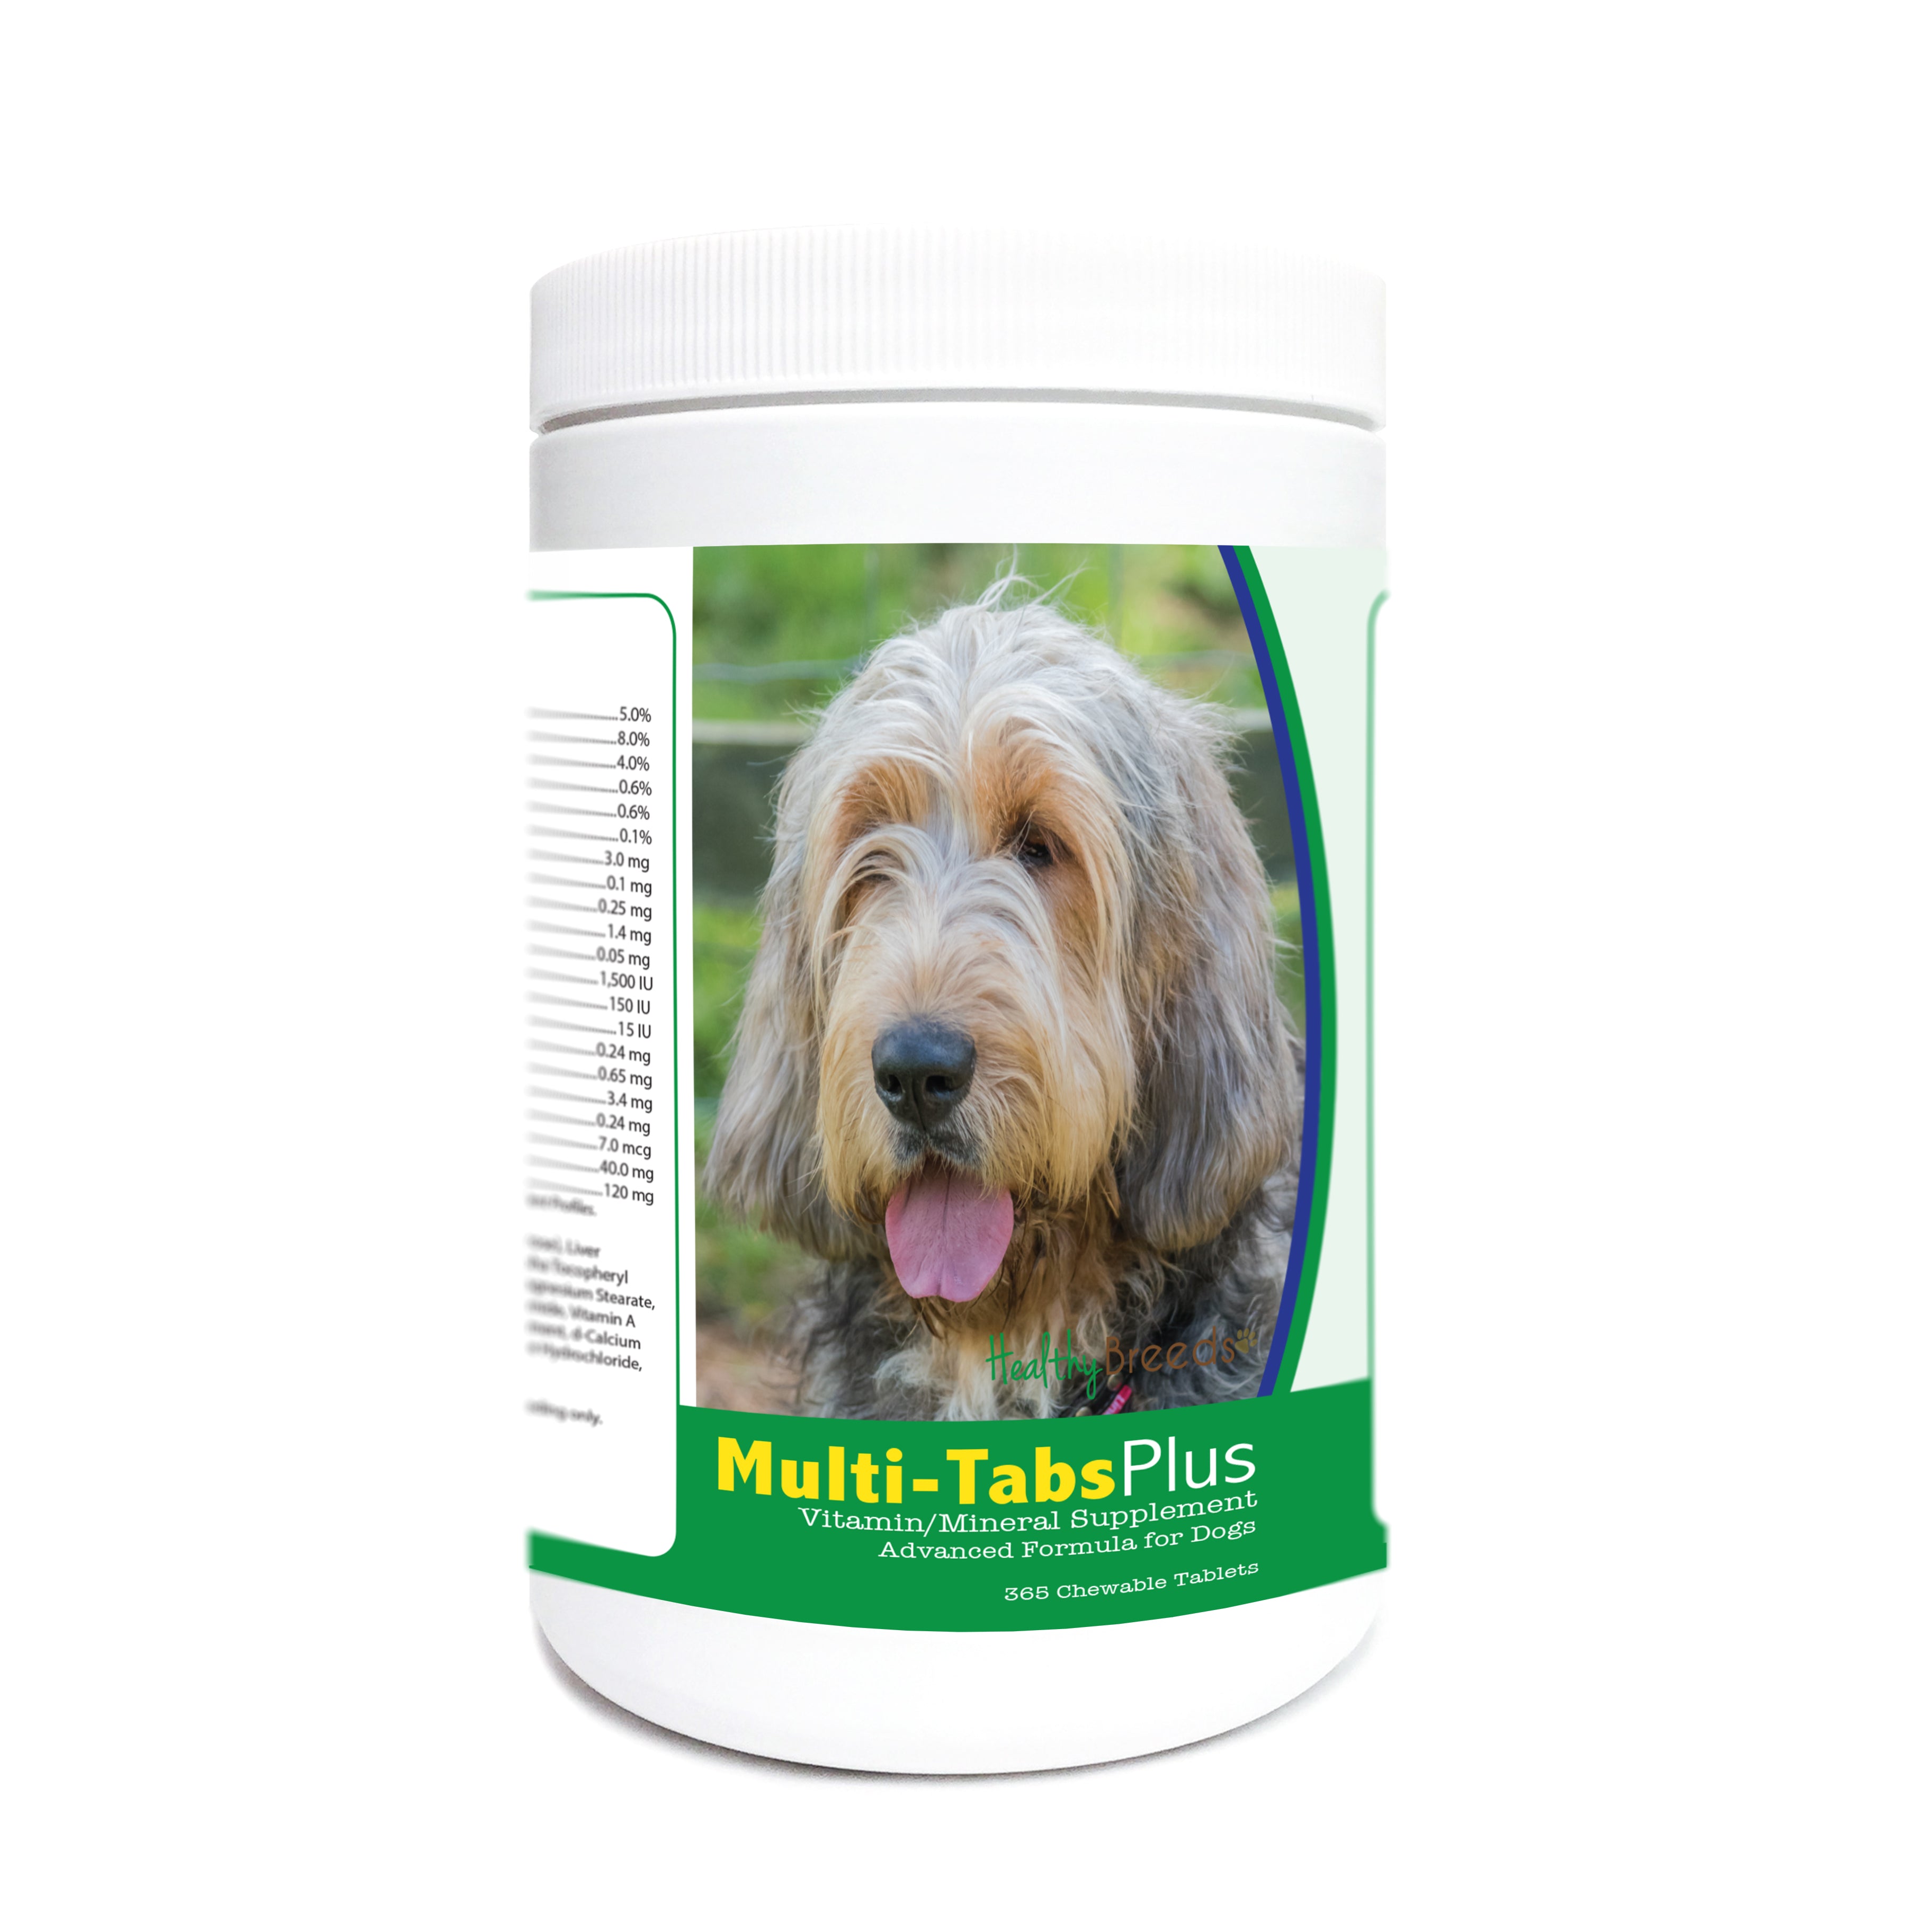 Otterhound Multi-Tabs Plus Chewable Tablets 365 Count